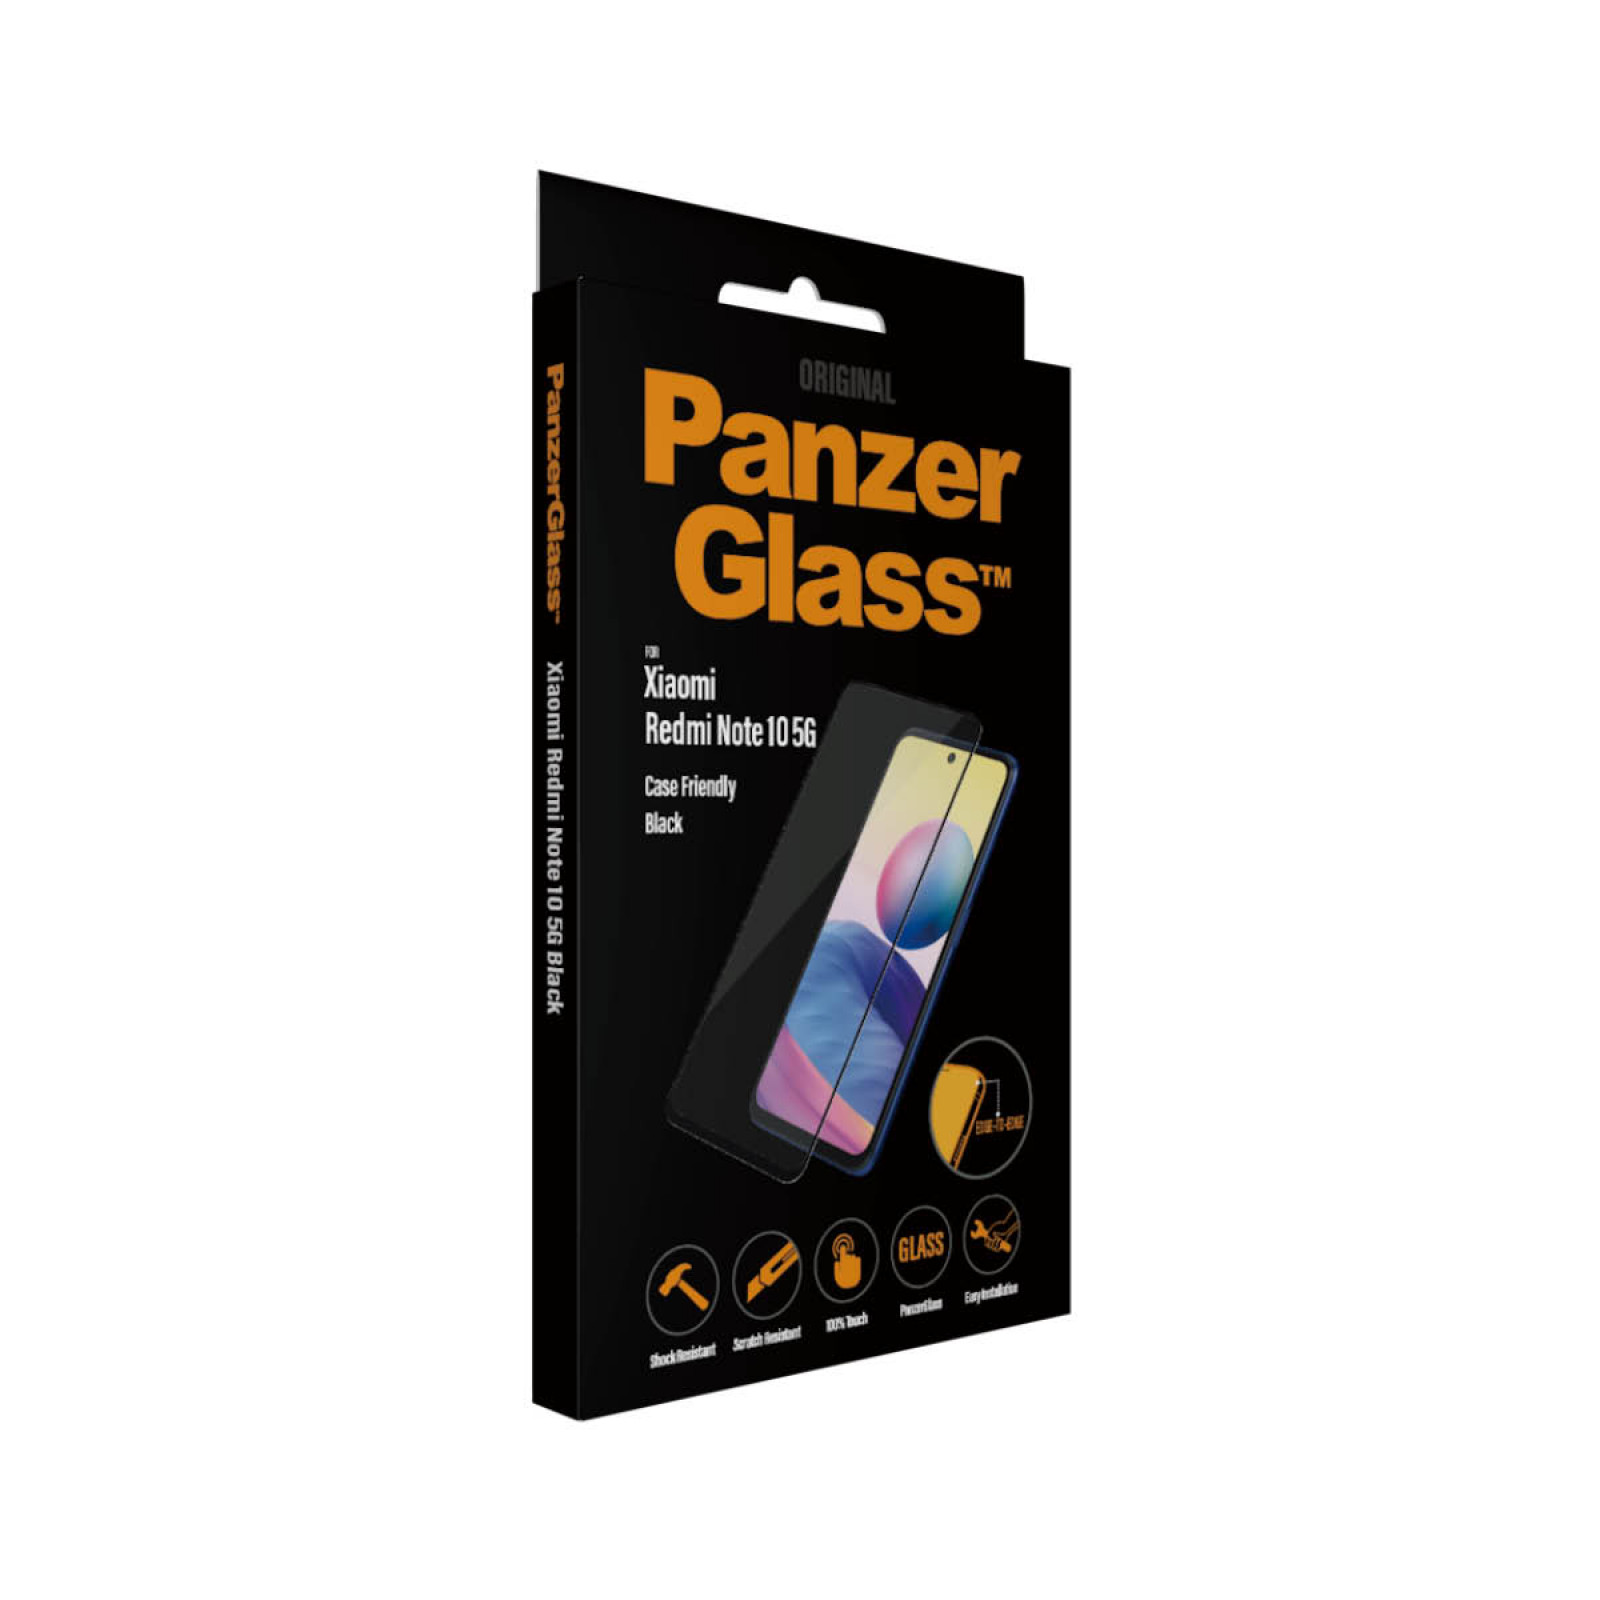 Стъклен протектор PanzerGlass за Xiaomi Redmi Note 10 5G CaseFriendly - Черен